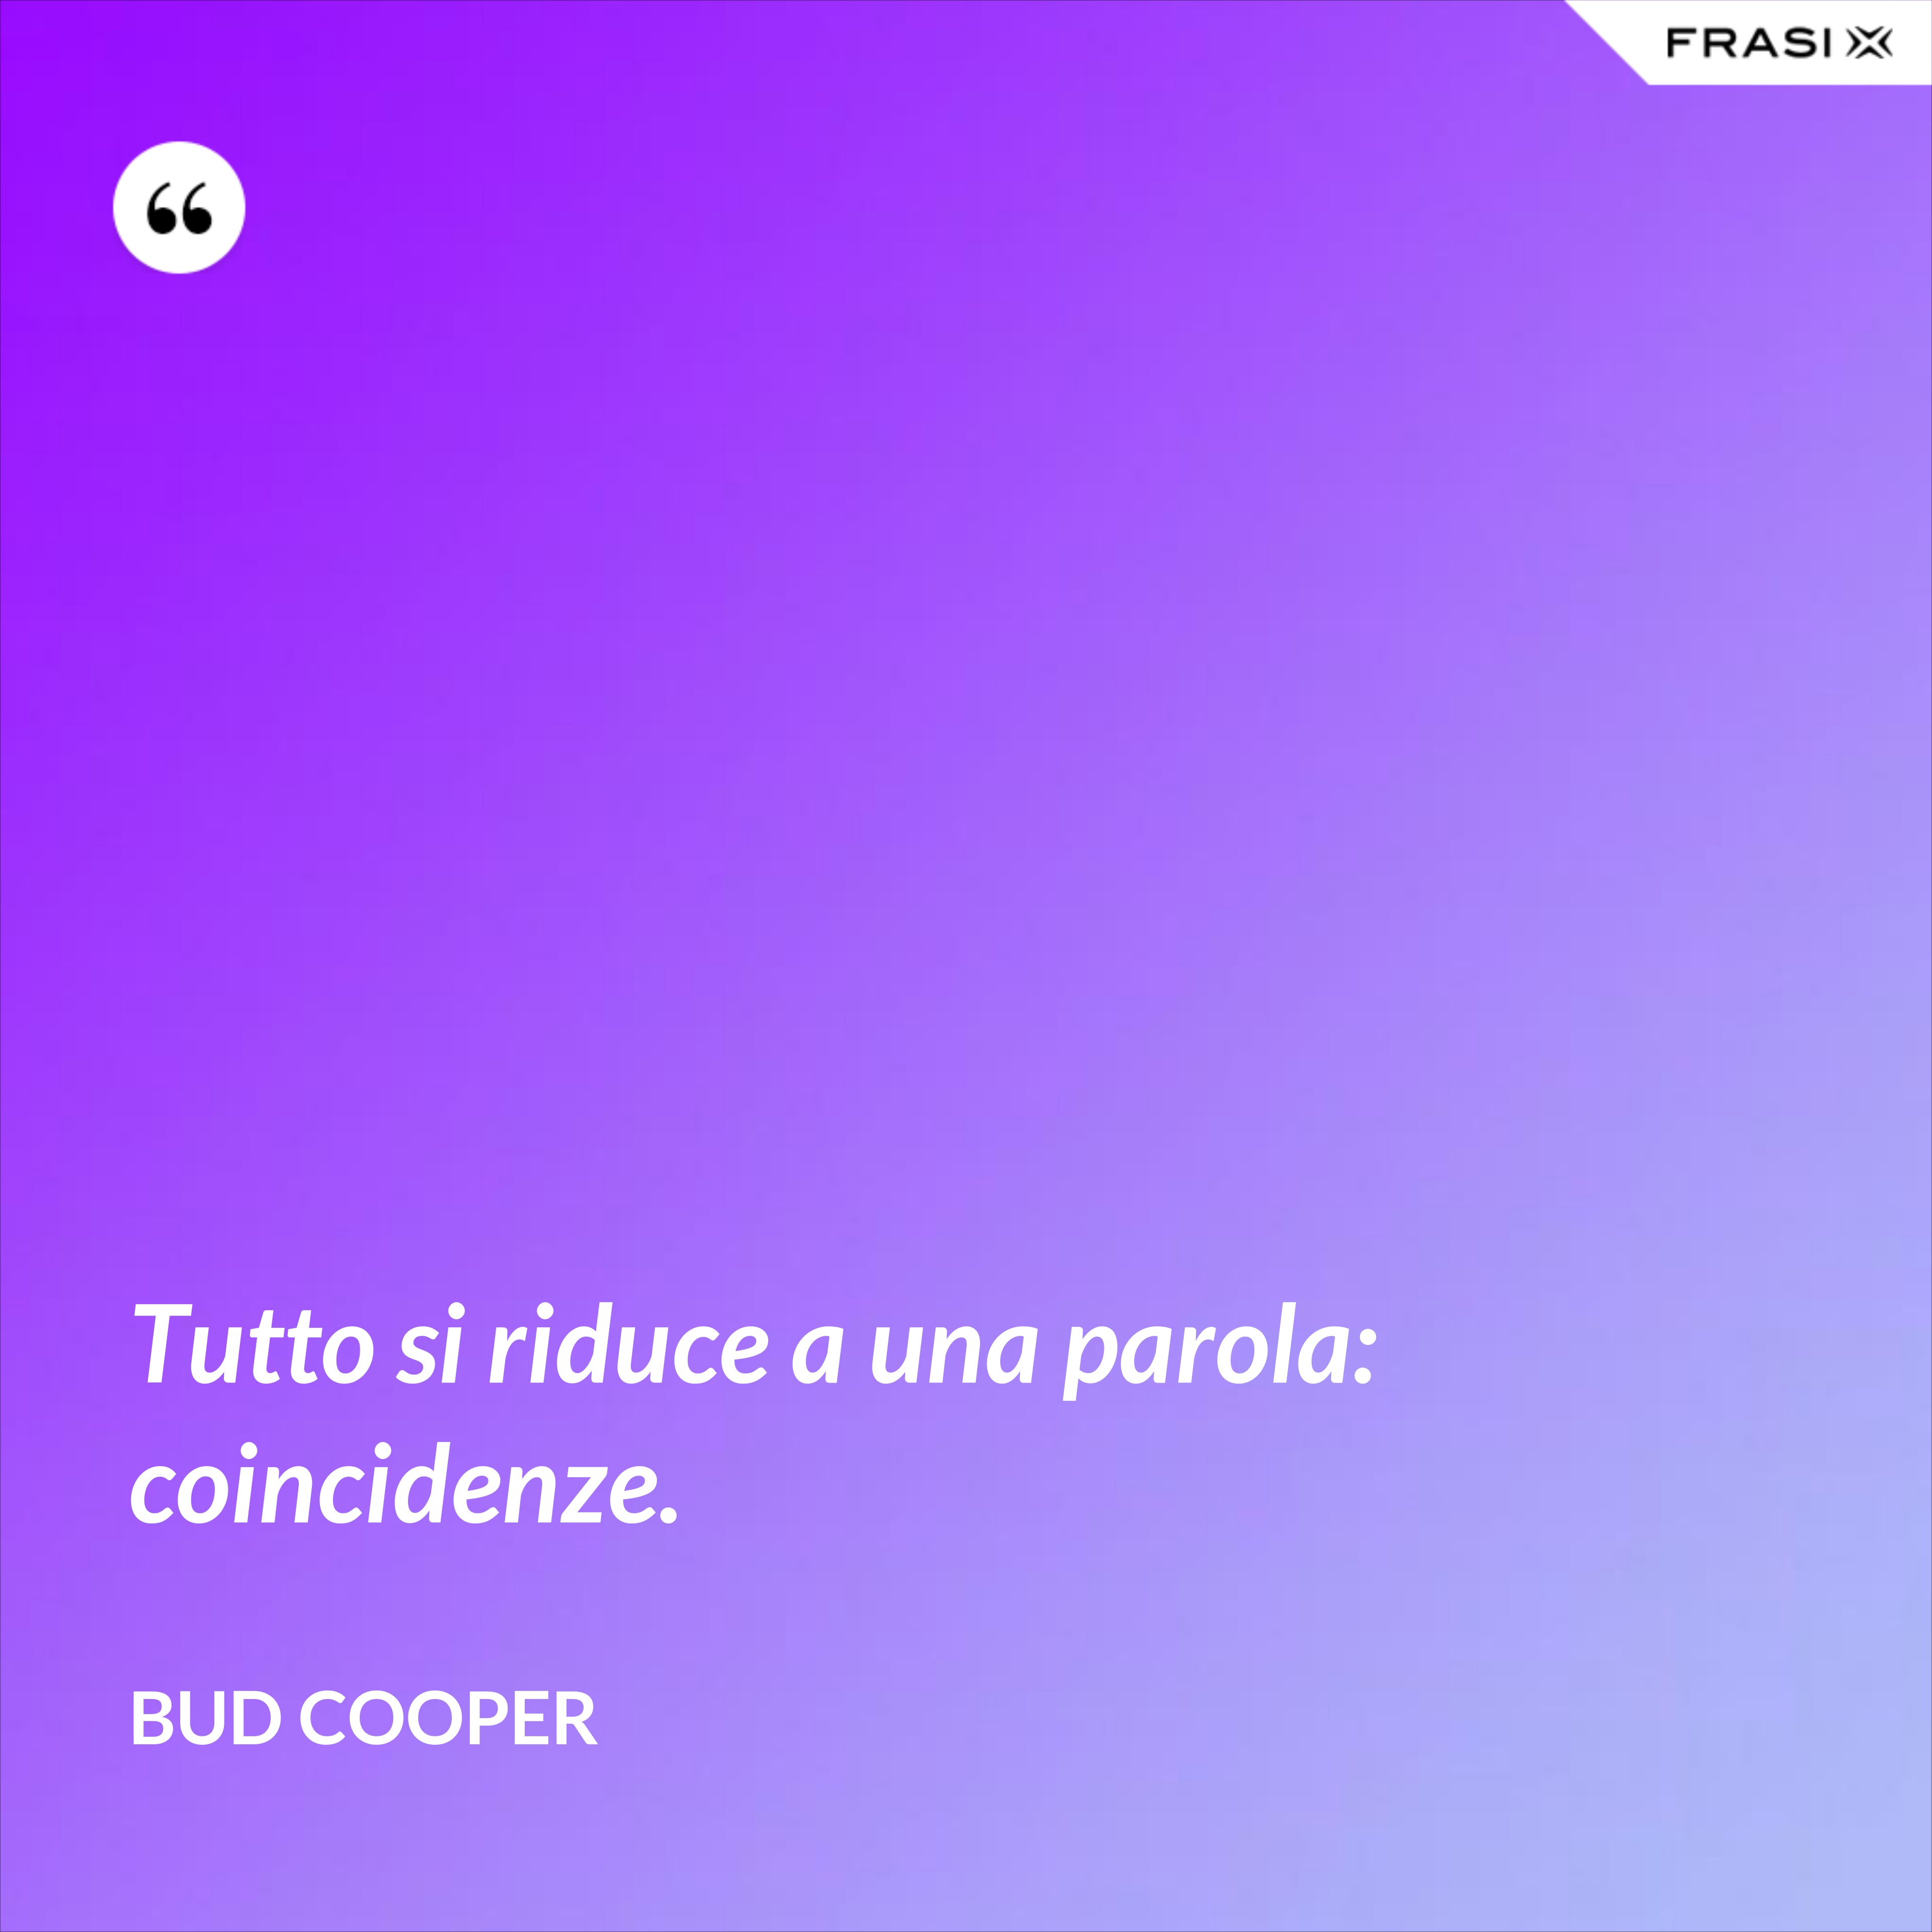 Tutto si riduce a una parola: coincidenze. - Bud Cooper